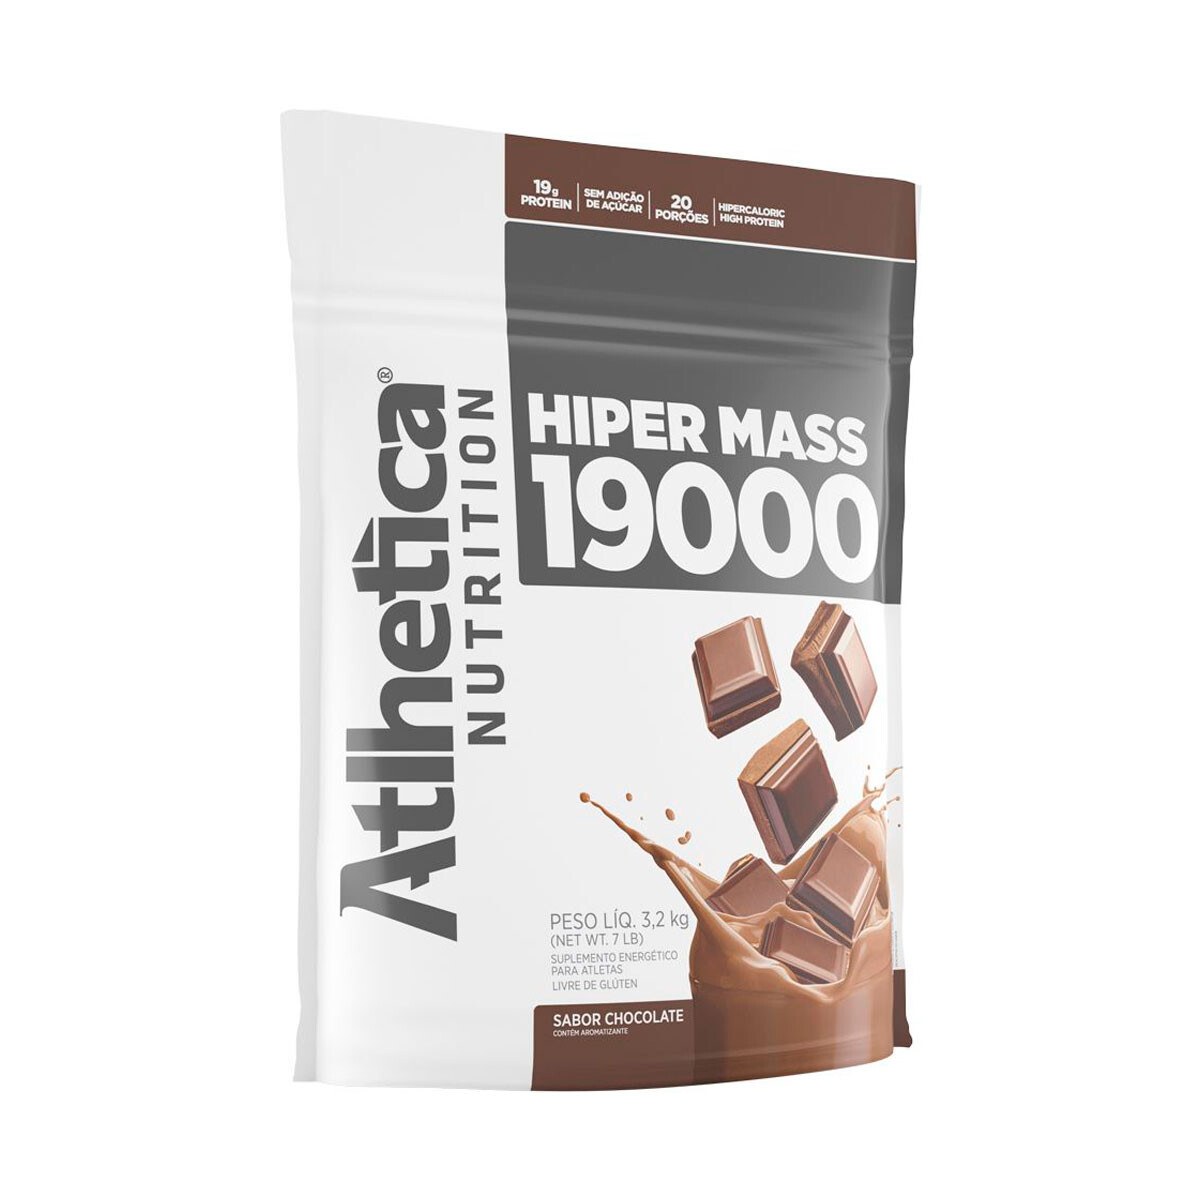 Atlhetica Hiper Mass 19000 3.2kg - Chocolate 